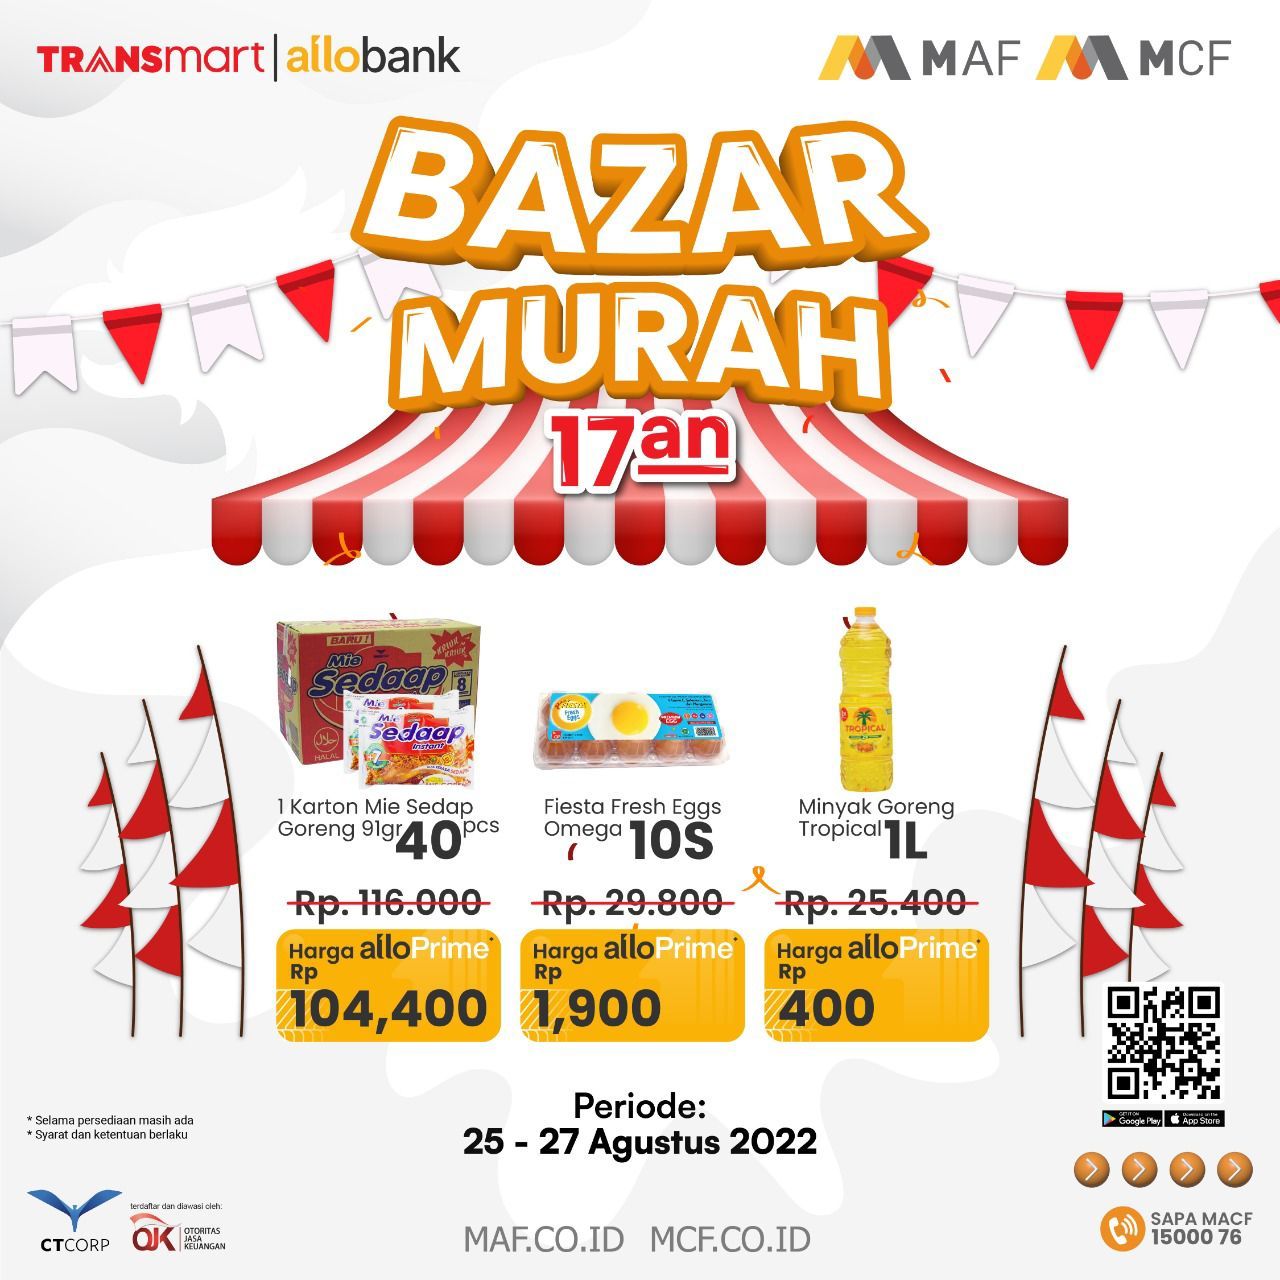 Bazaar Murah